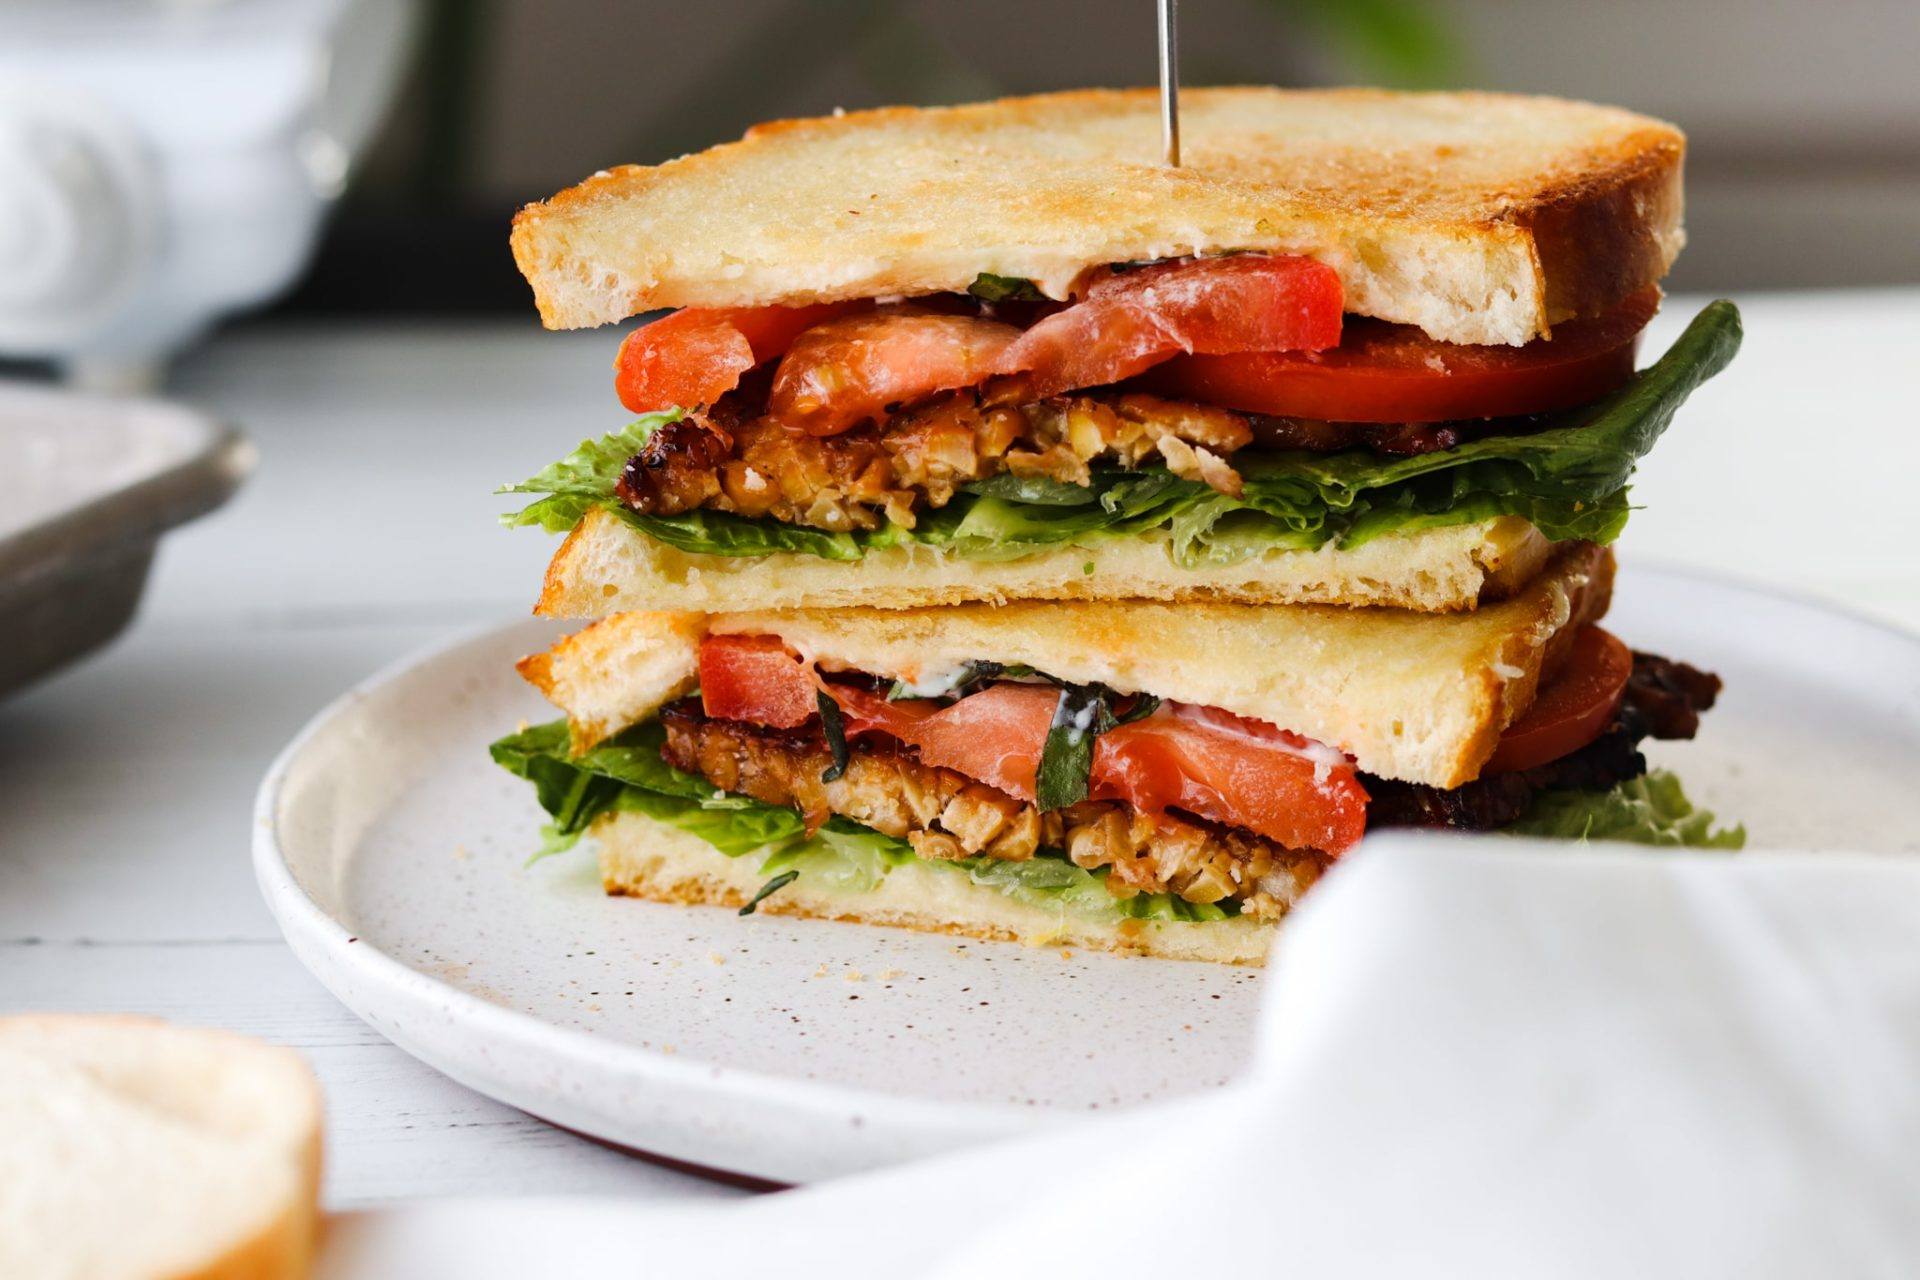 vegan blt sandwich